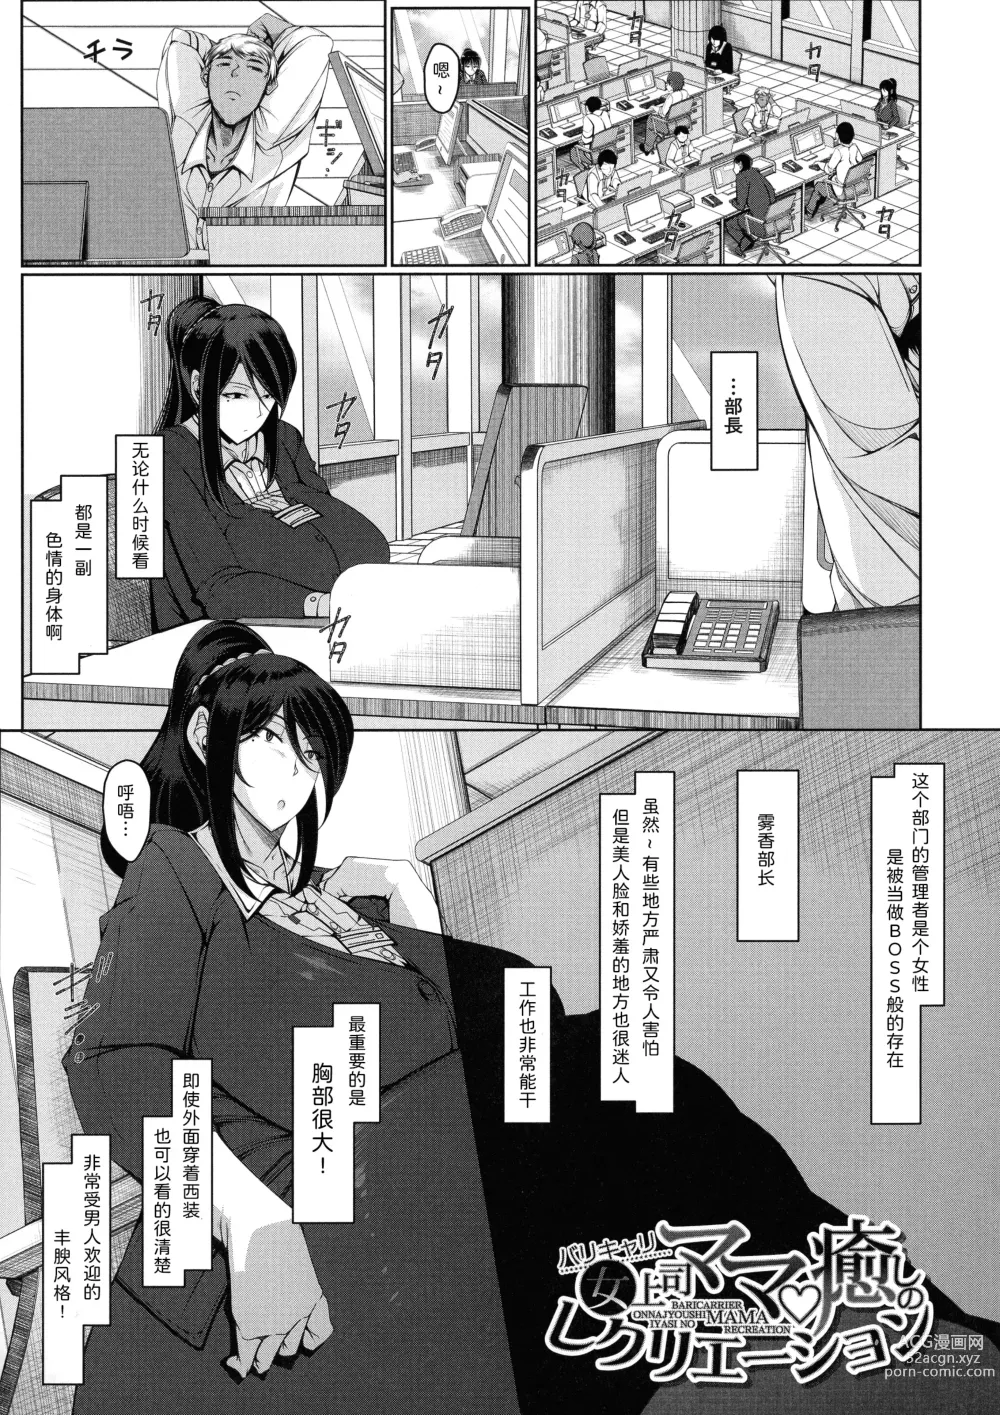 Page 2 of manga Barikyari Onna Joshi Mama Iyashino Recreation